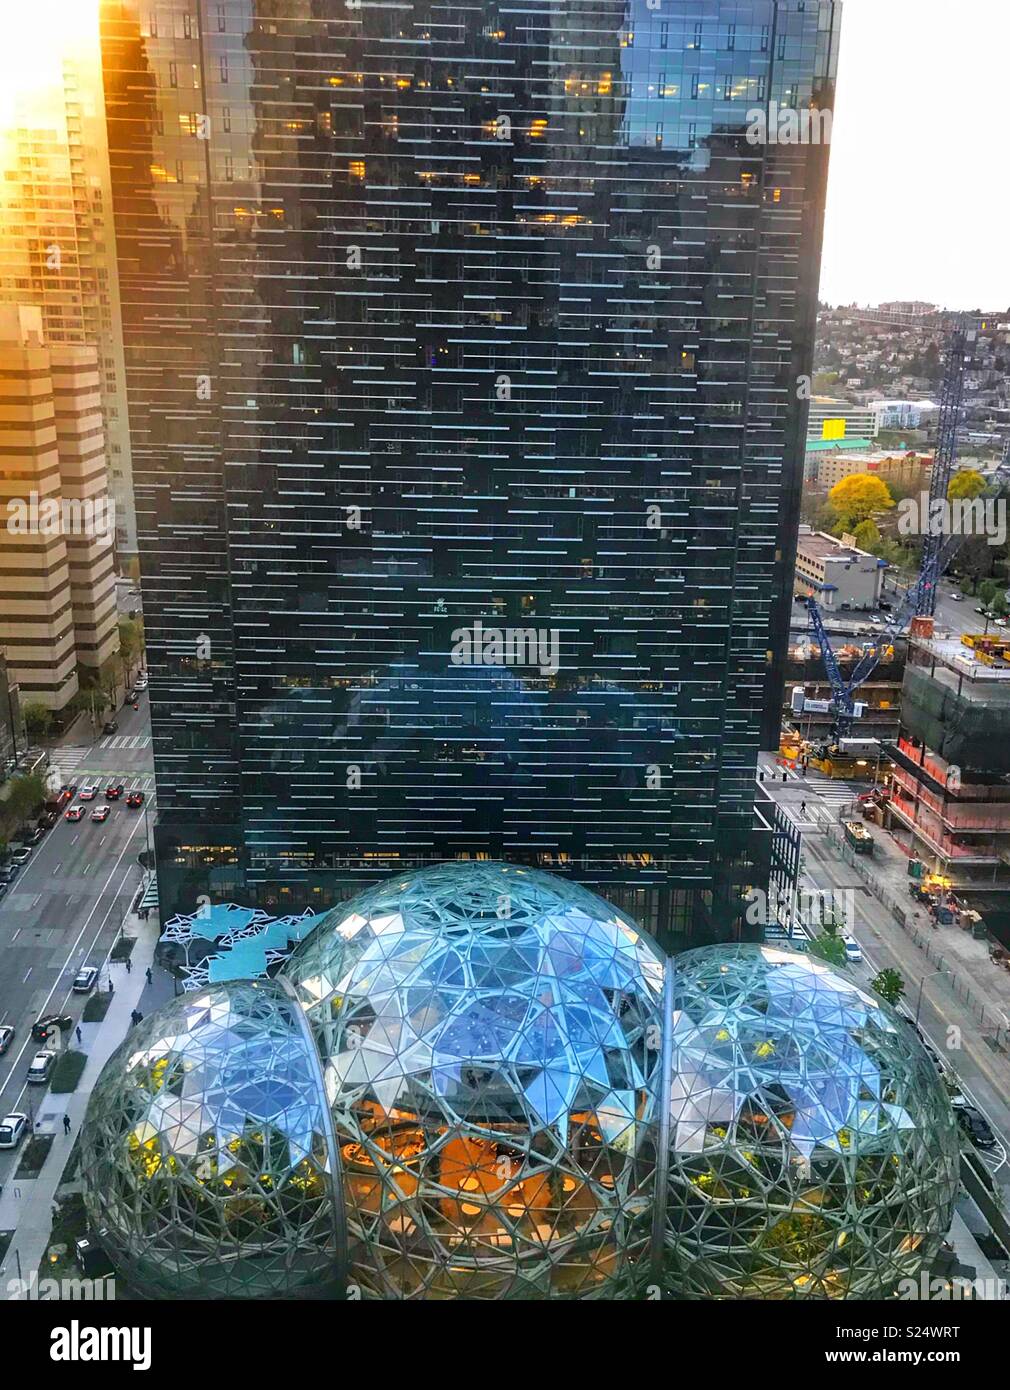 Tag 1 Tower, Amazon Gebäude in Seattle, Washington. Kugeln in den  Vordergrund Stockfotografie - Alamy